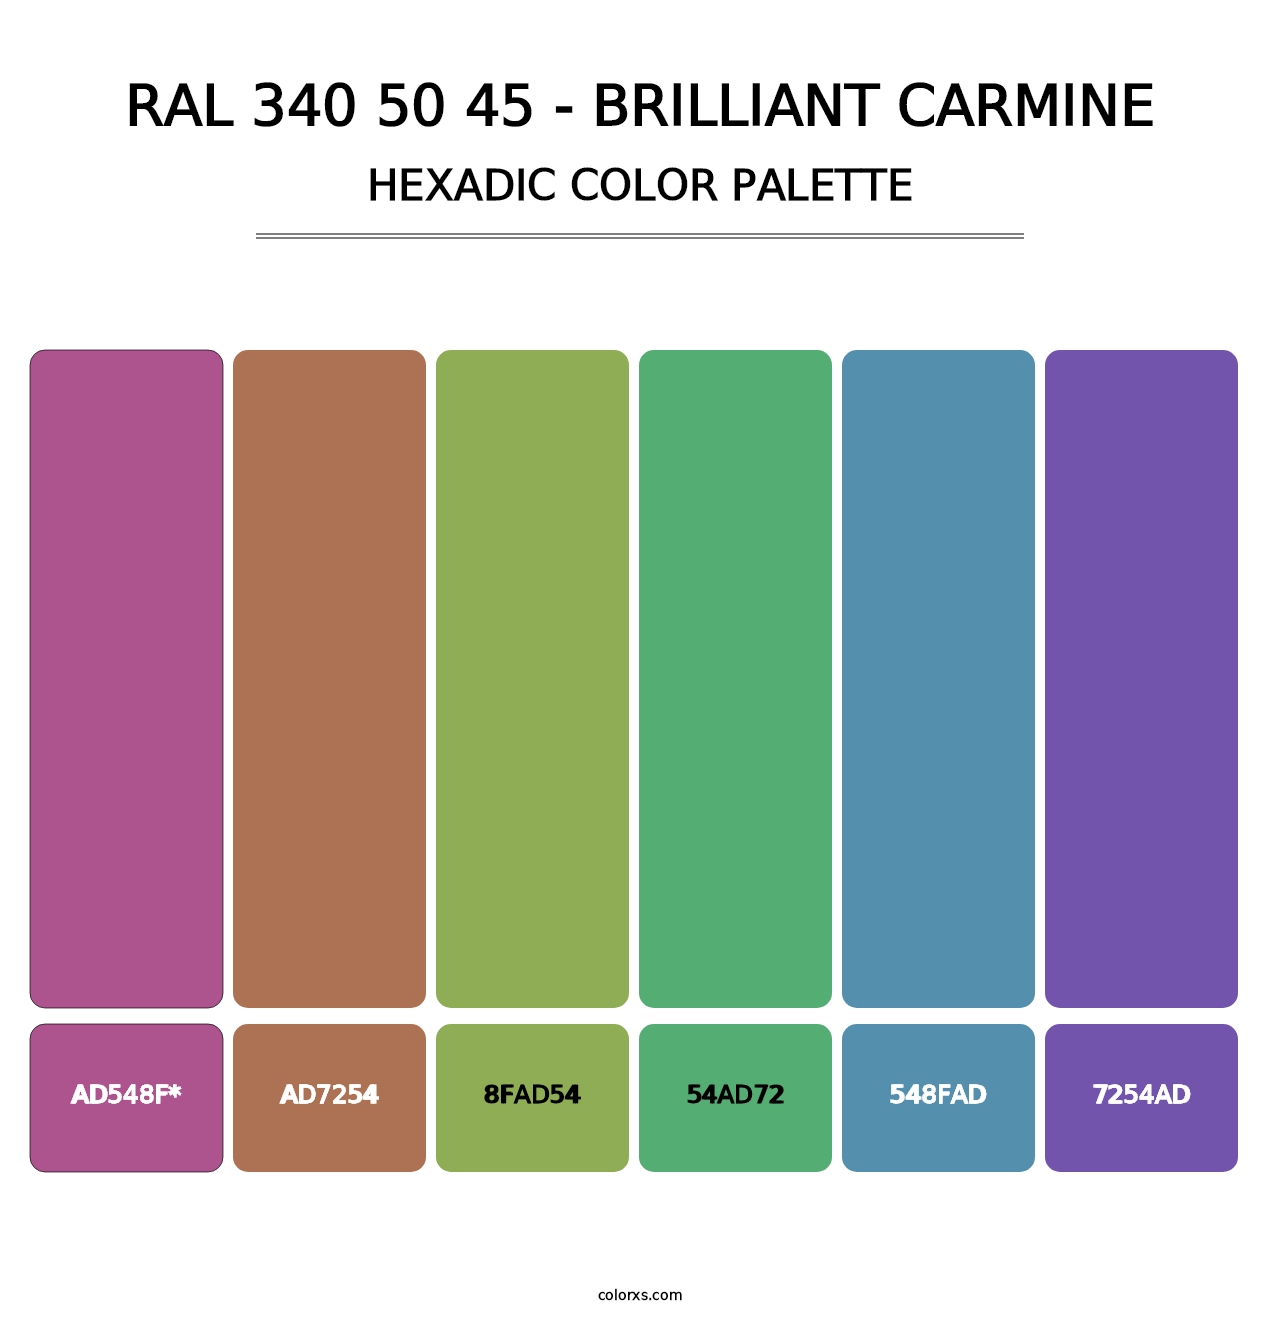 RAL 340 50 45 - Brilliant Carmine - Hexadic Color Palette